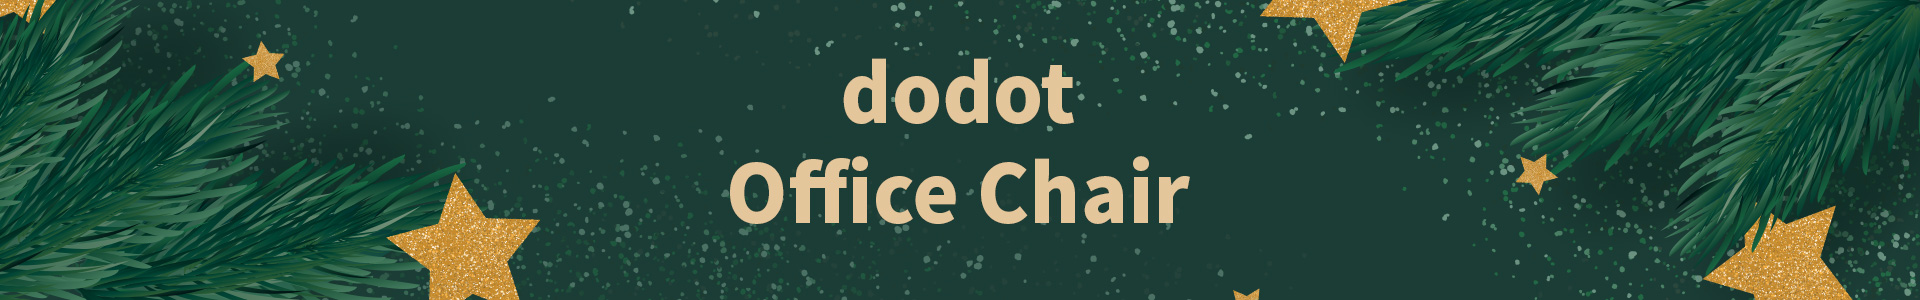 dodot Office Chair